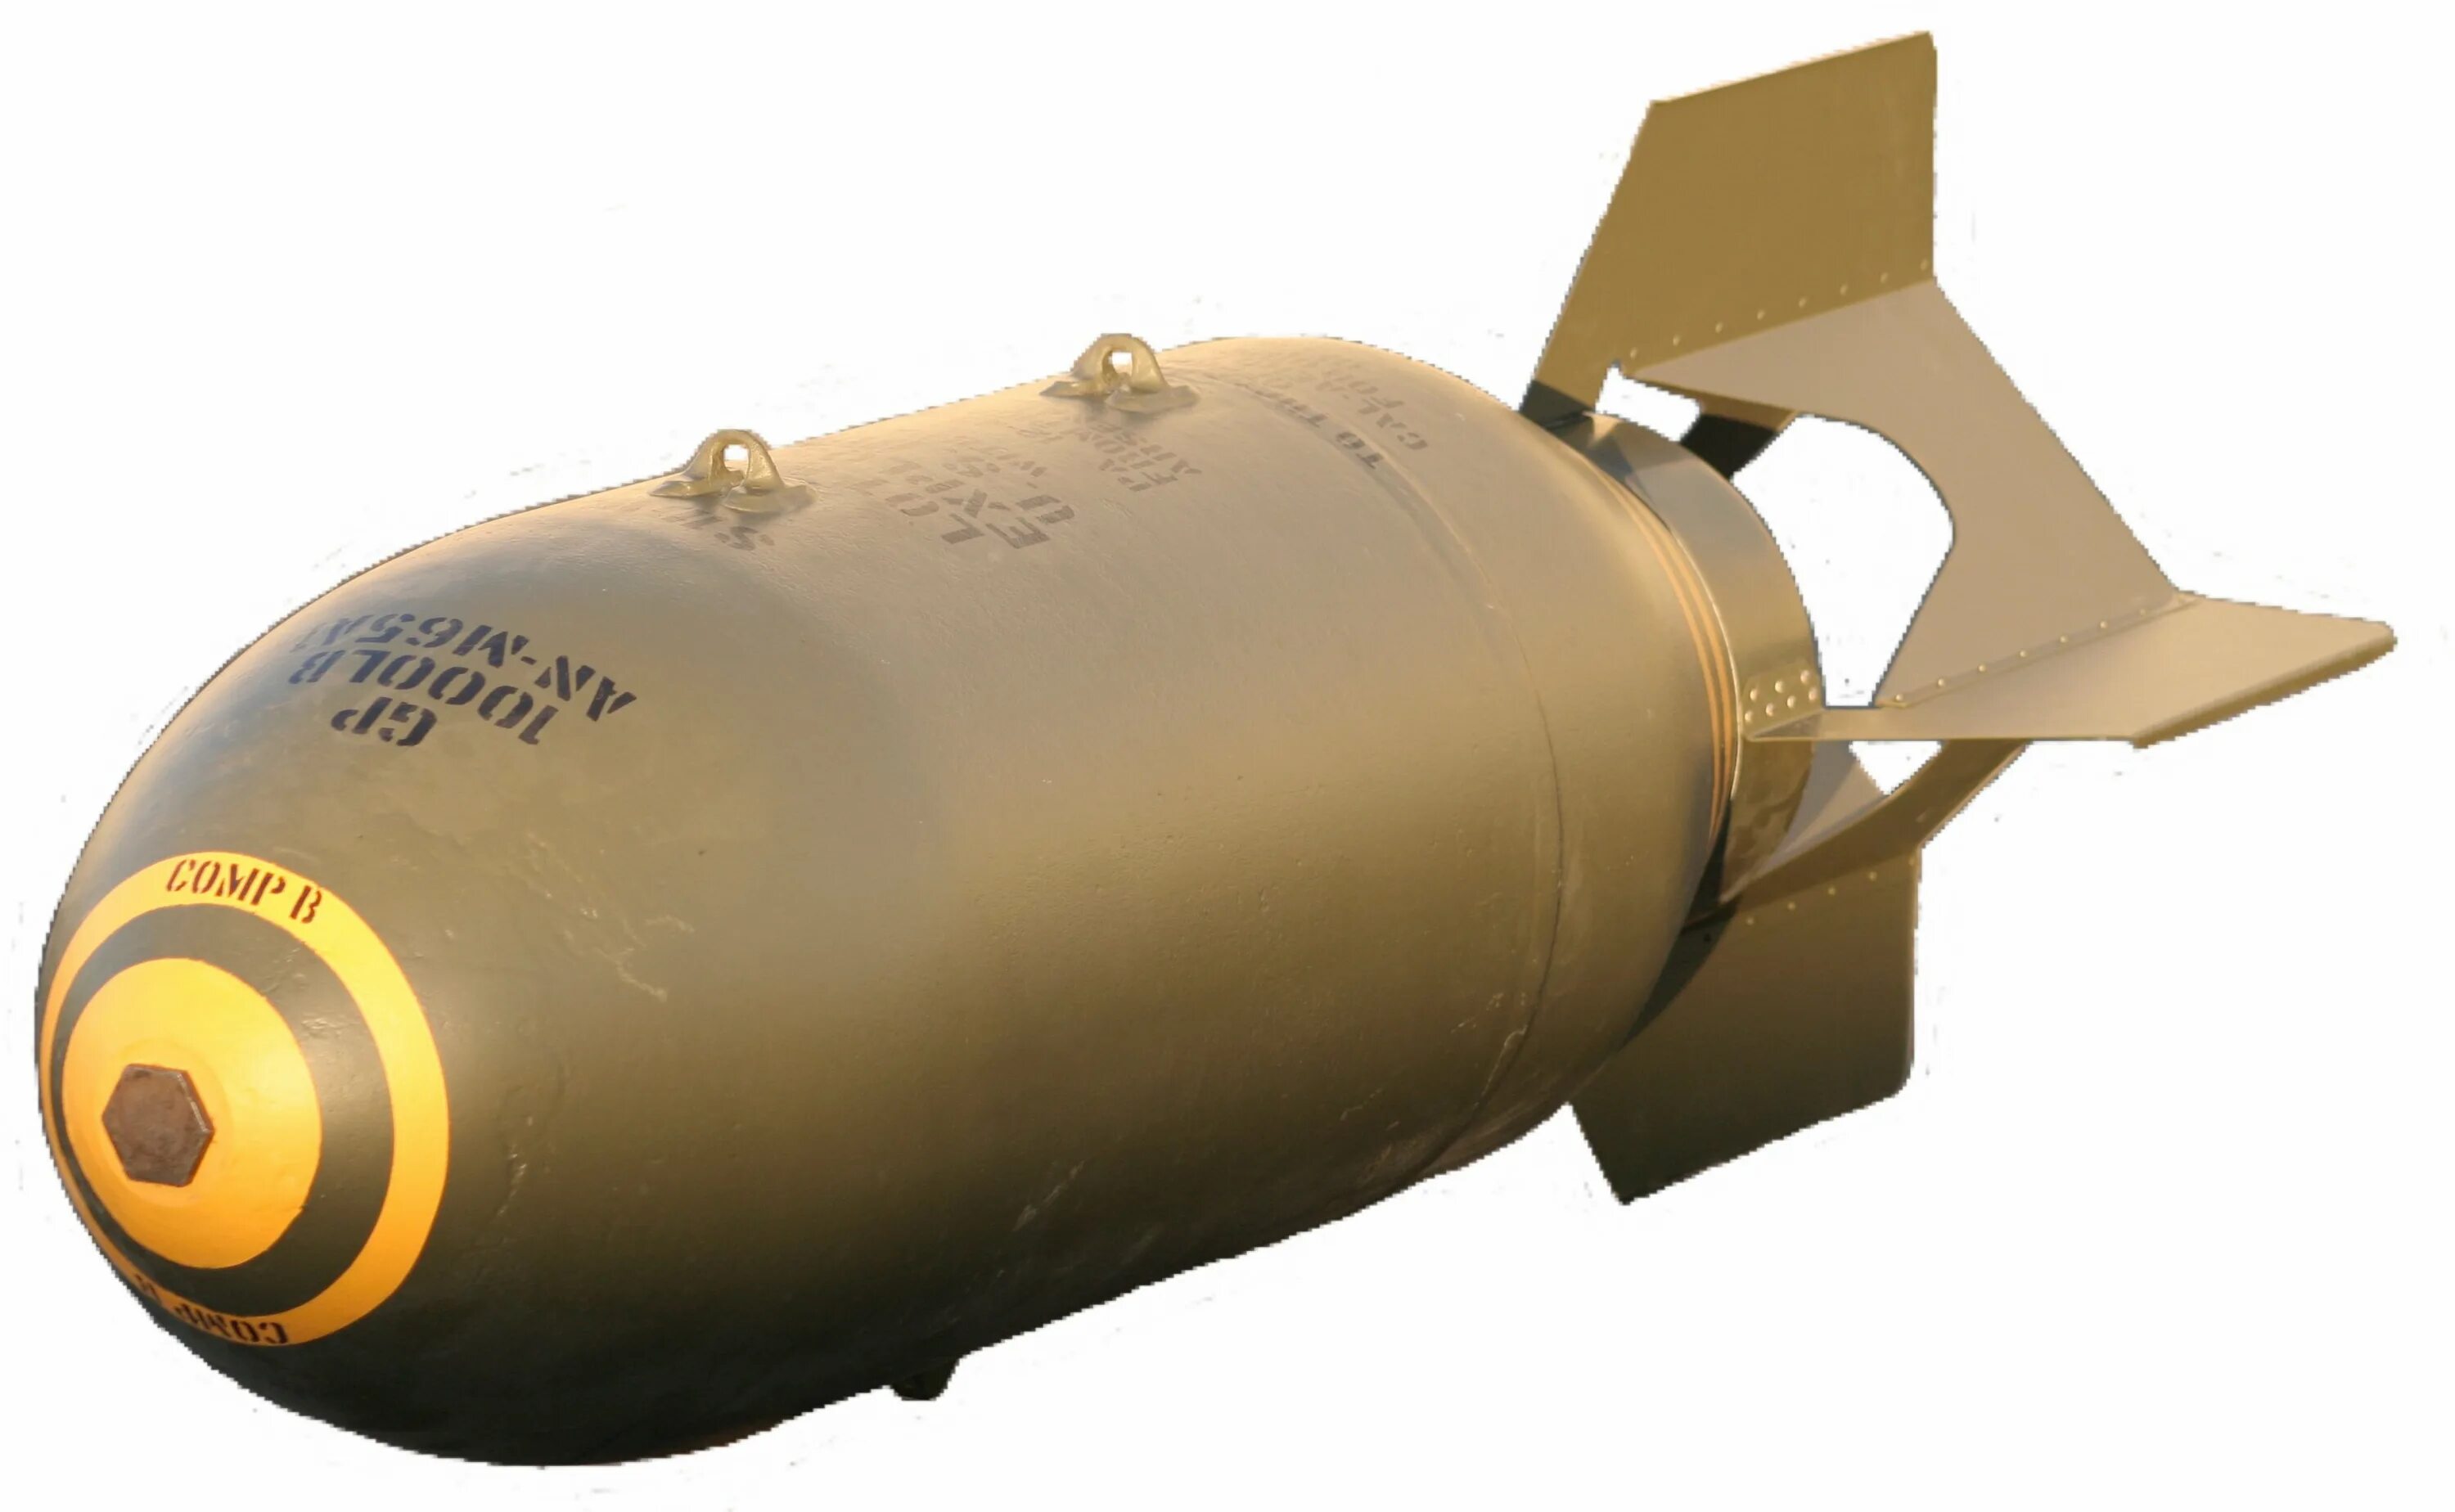 Включи песню бомби бомби. Авиационная бомба вид сбоку. ПЛАБ 5ф48 «скальп». Самолётная бомба вид сбоку. Sc1000l2 бомба.